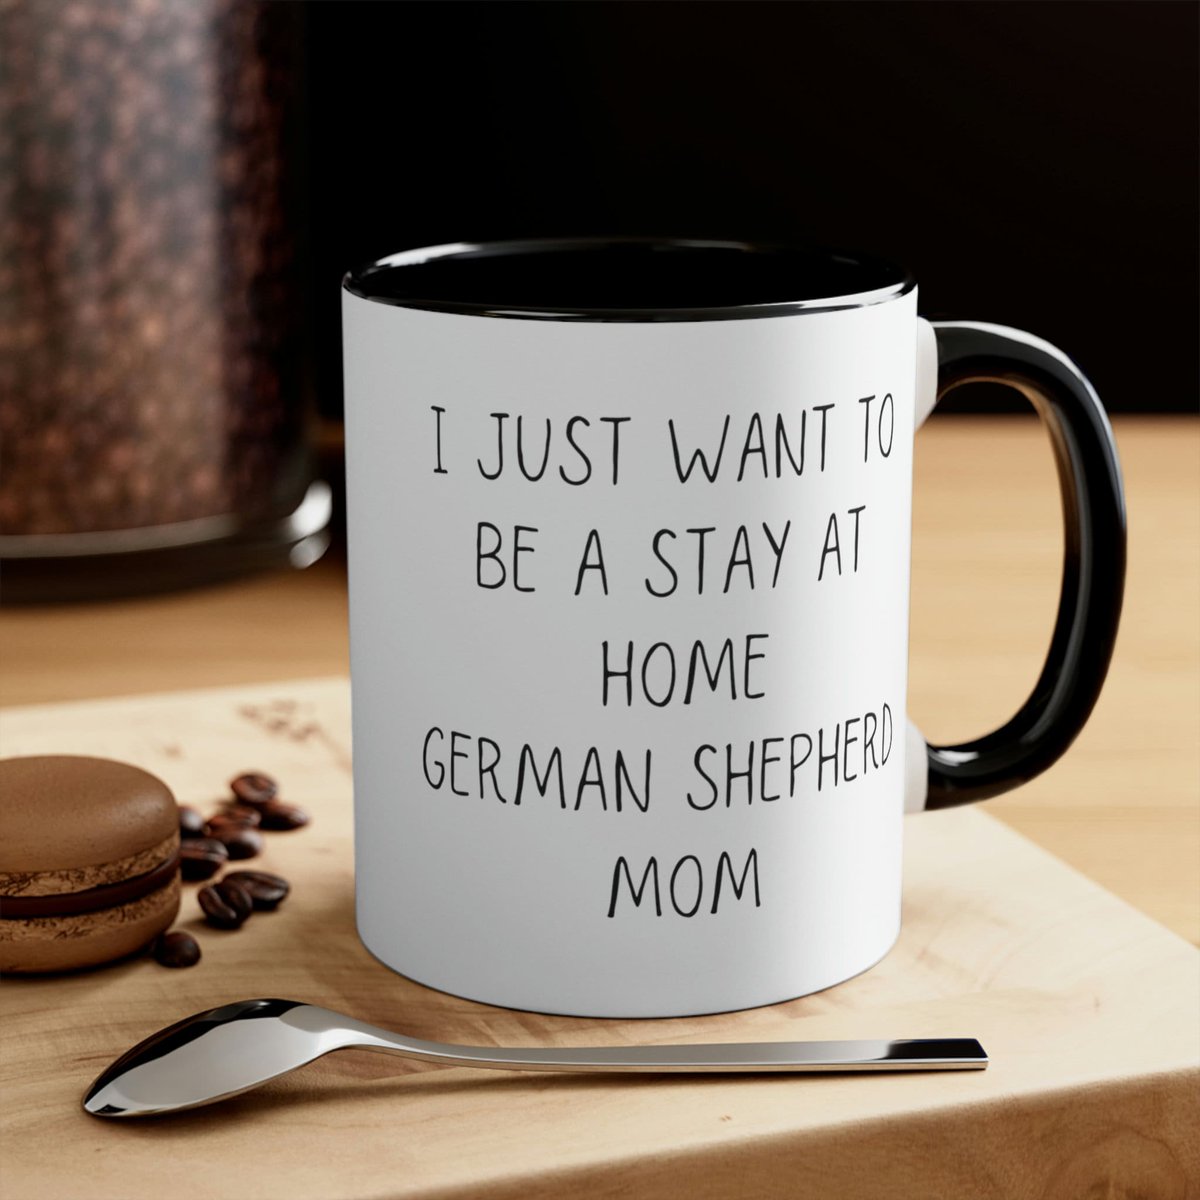 Funny German Shepherd Mom Gift Mug #germanshepherd #germanshepherddog #germanshepherdgift #germanshepherdmom #dogmothersday #germansepherdmothersday #germansheperdmug CLICK HERE TO BUY NOW: etsy.me/3oxjvoq